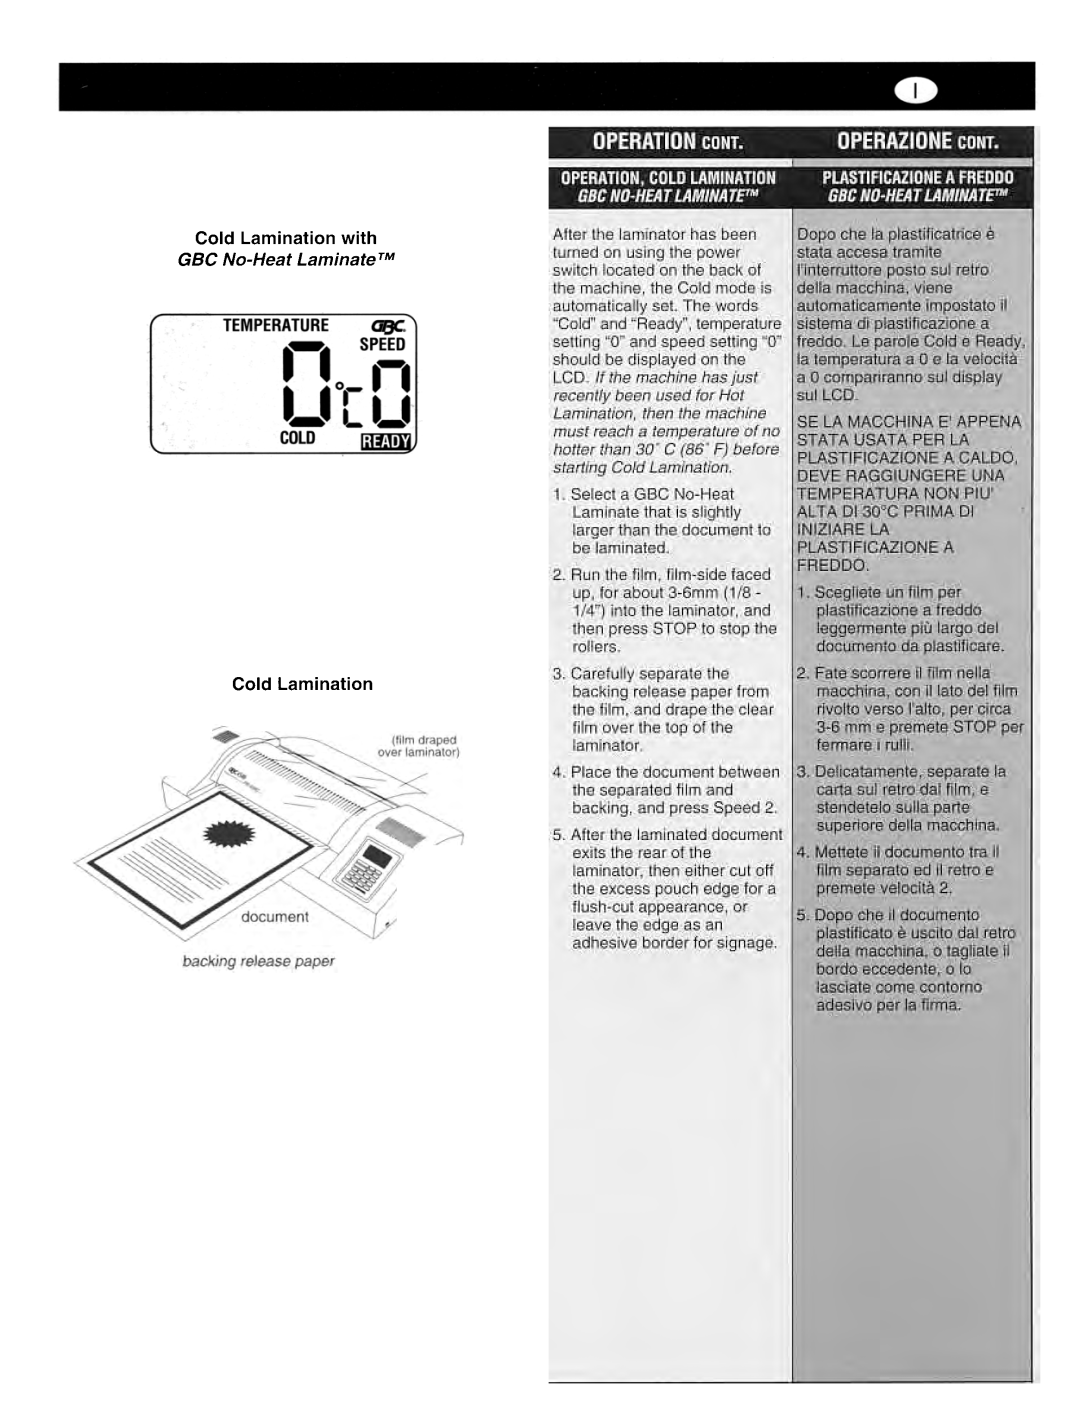 GBC 4500 manual Cold Lamination with GBC No-Heat Laminate TM 